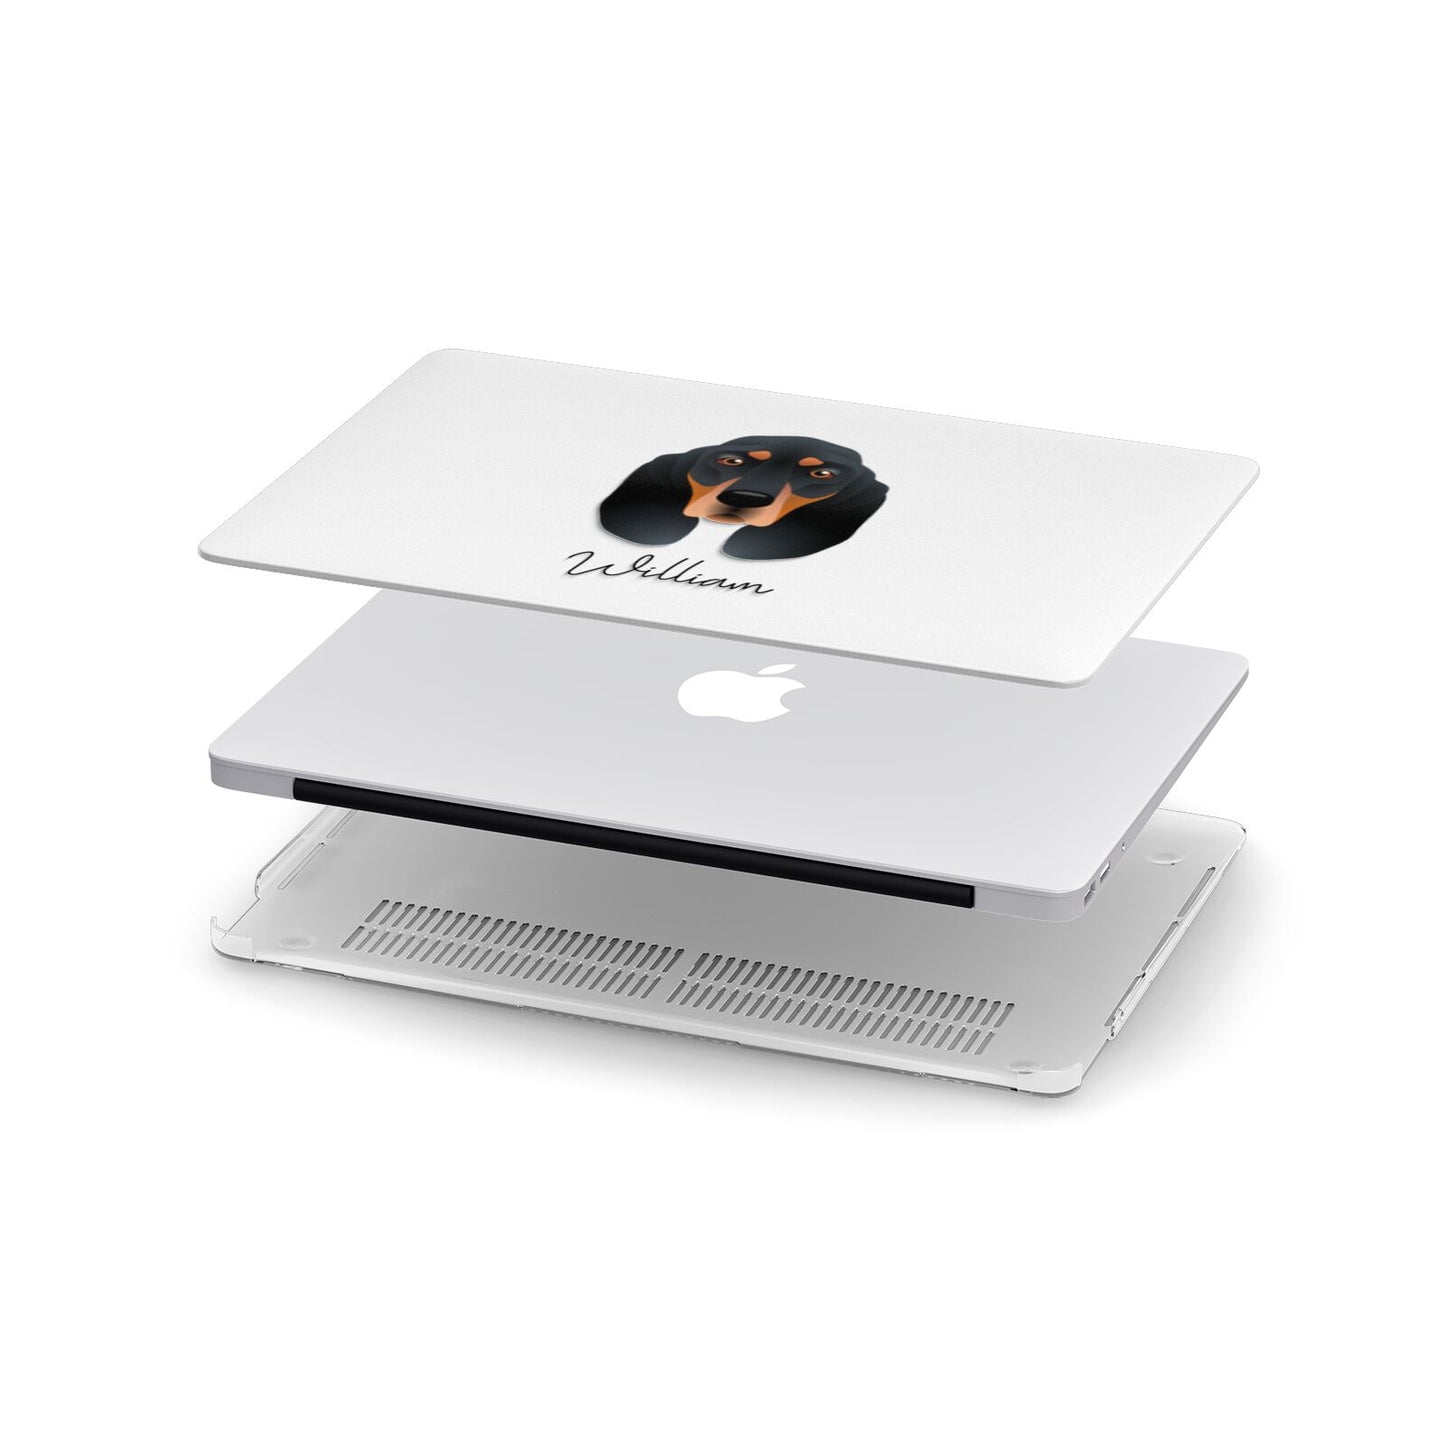 Black and Tan Coonhound Personalised Apple MacBook Case in Detail